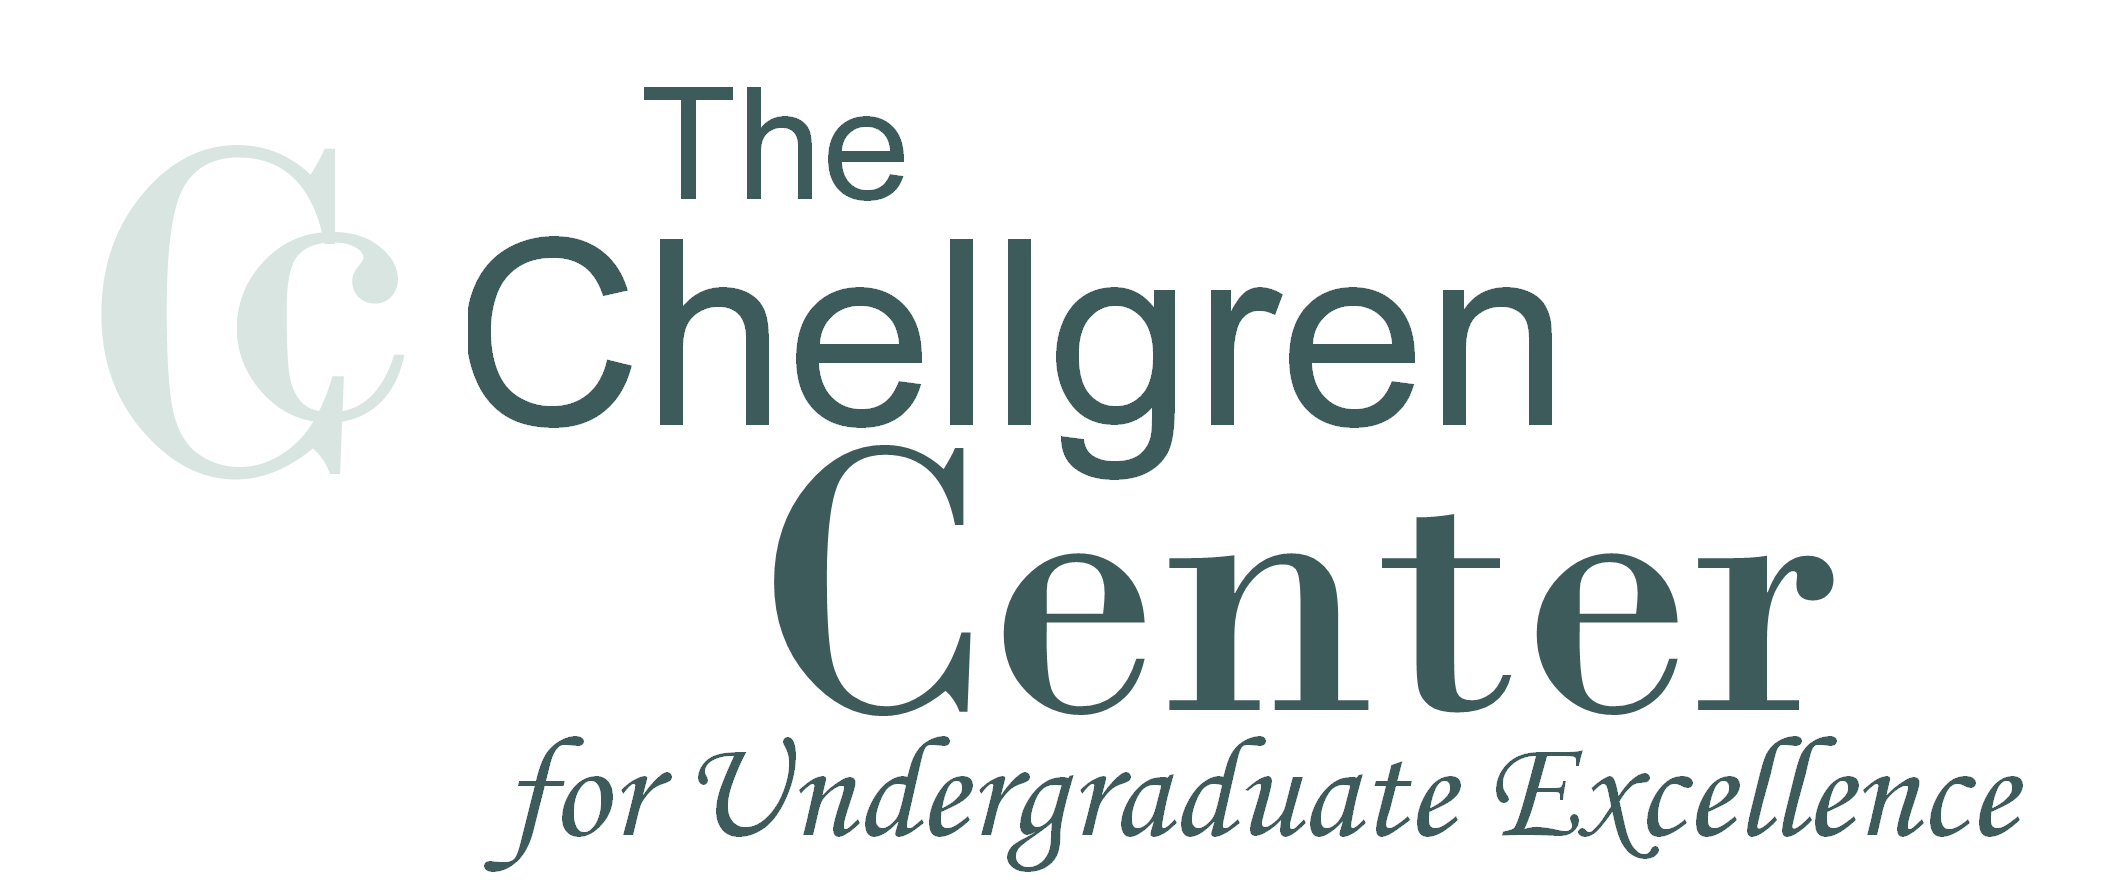 The Chellgren Center for Undergraduate Excellence